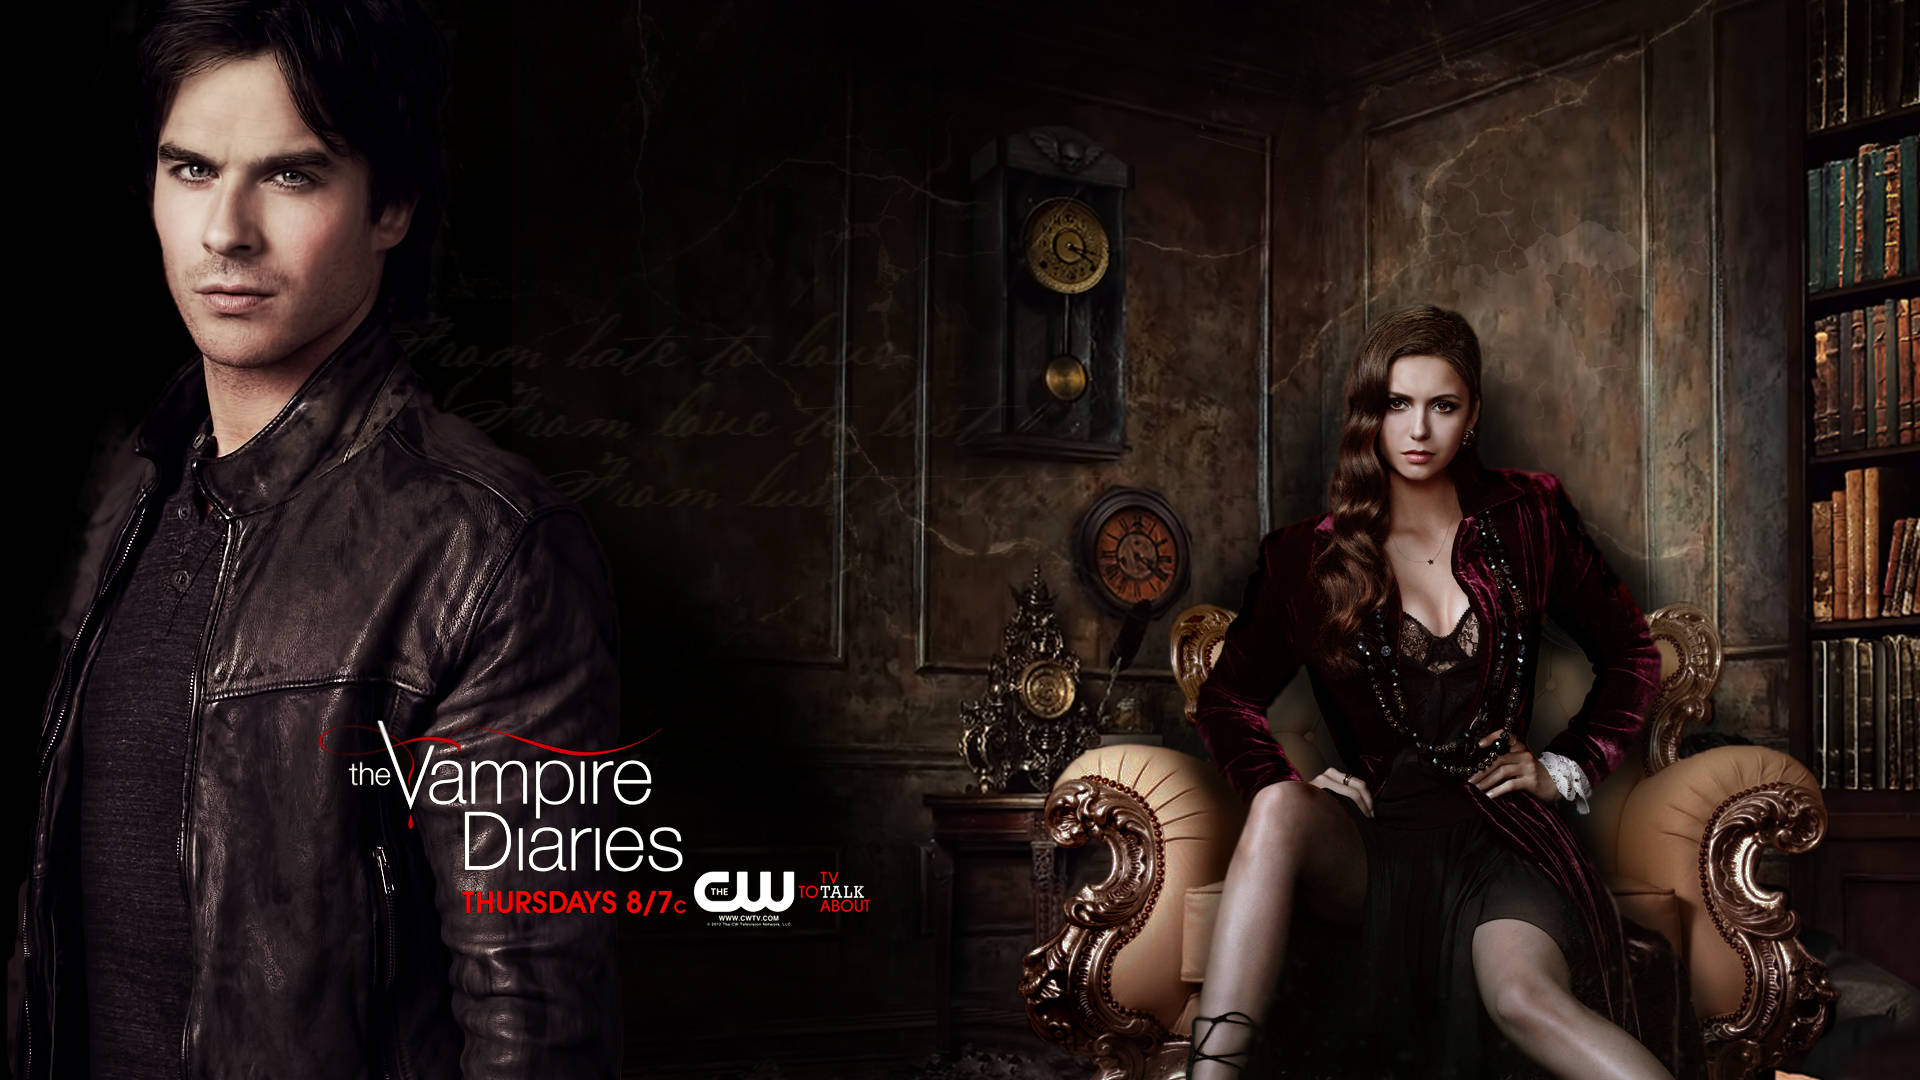 The Vampire Diaries Season 4 Poster Background